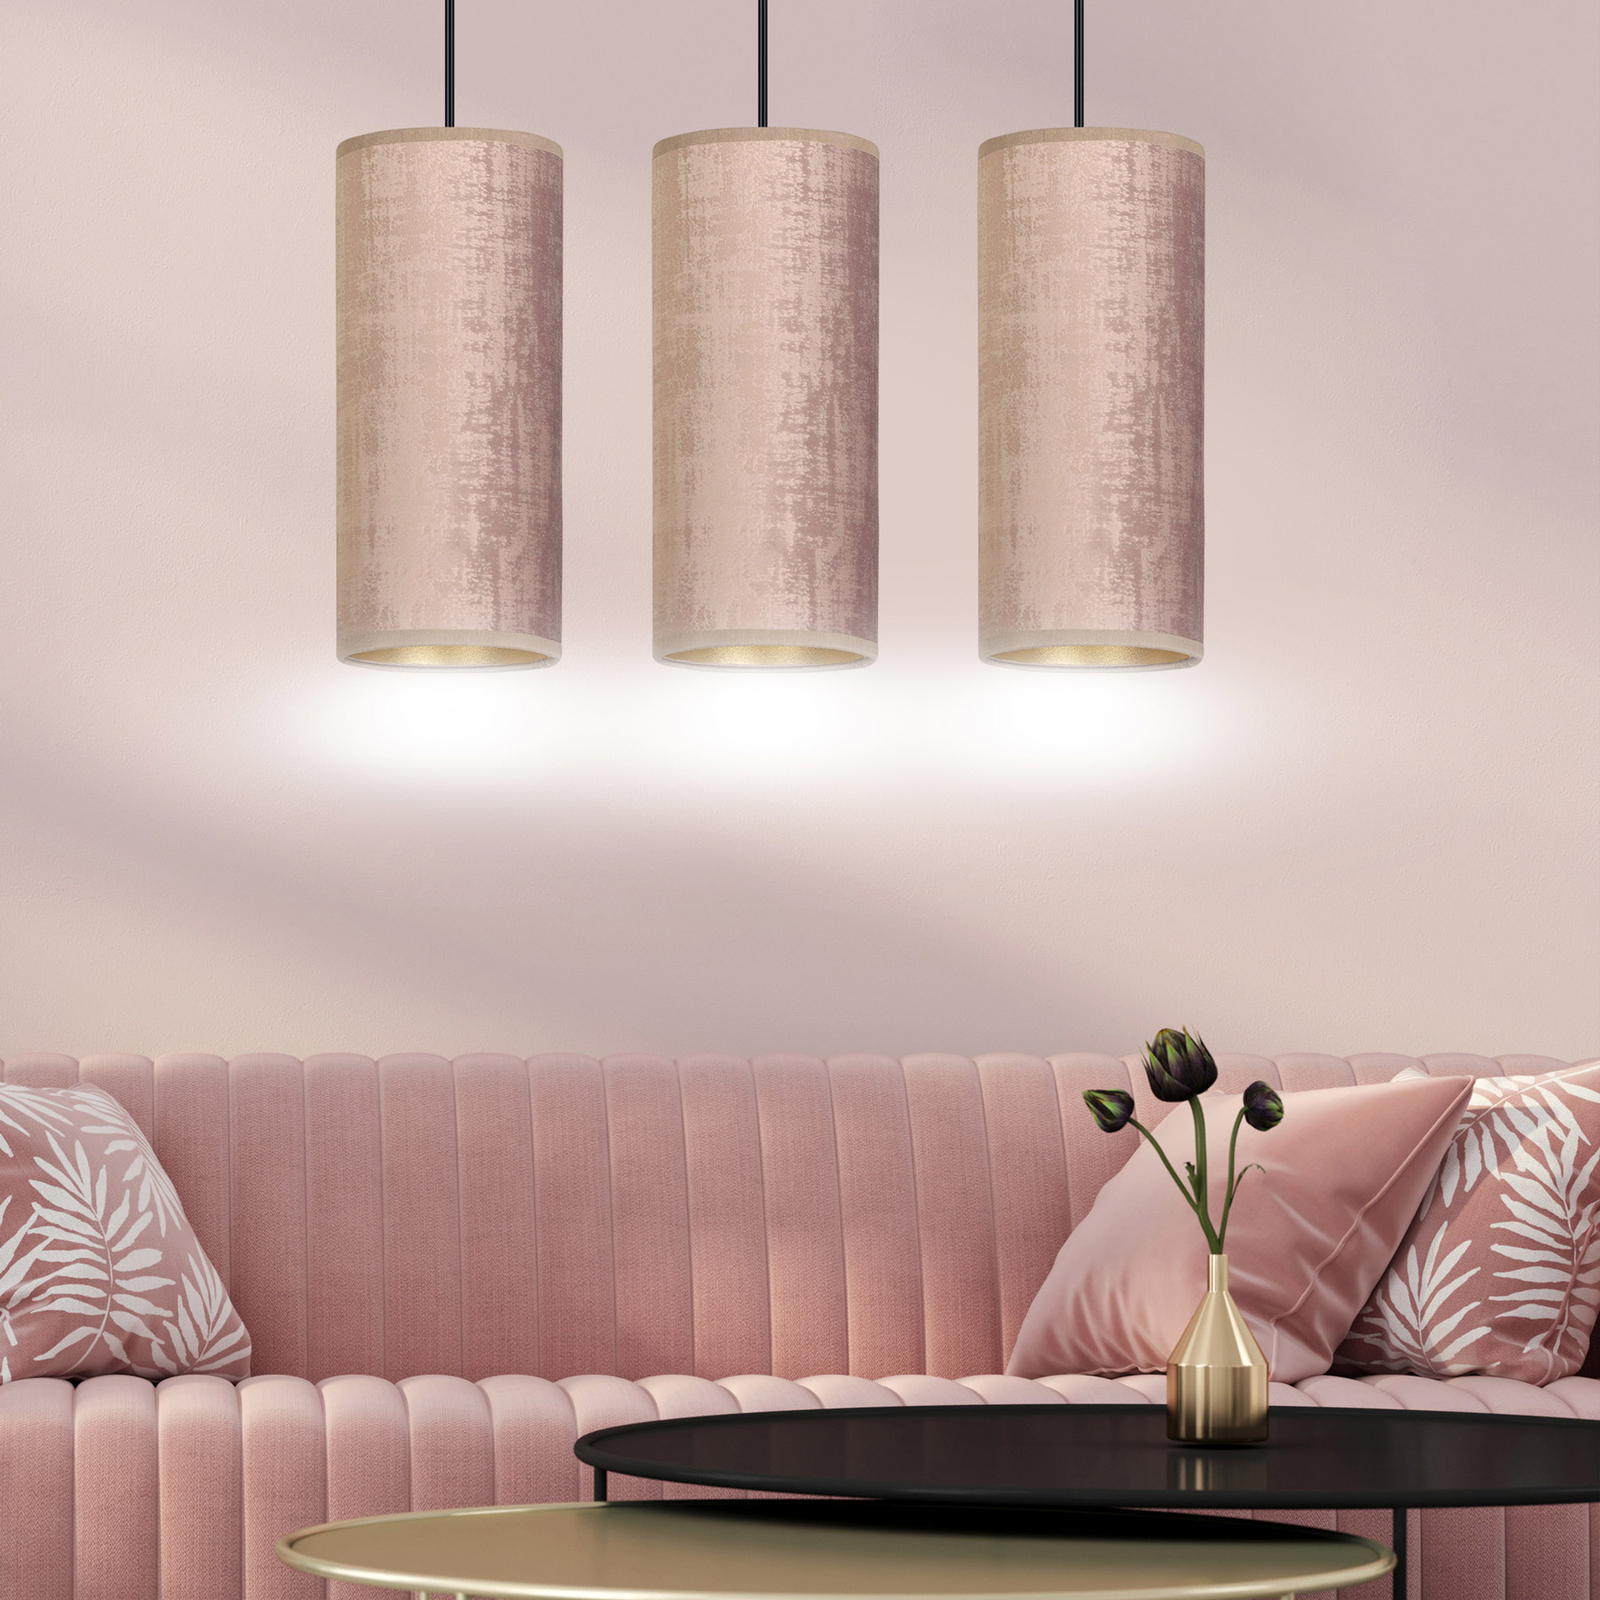 Hanglamp Joni, textiel, 3-lamps lang, rosé-goud